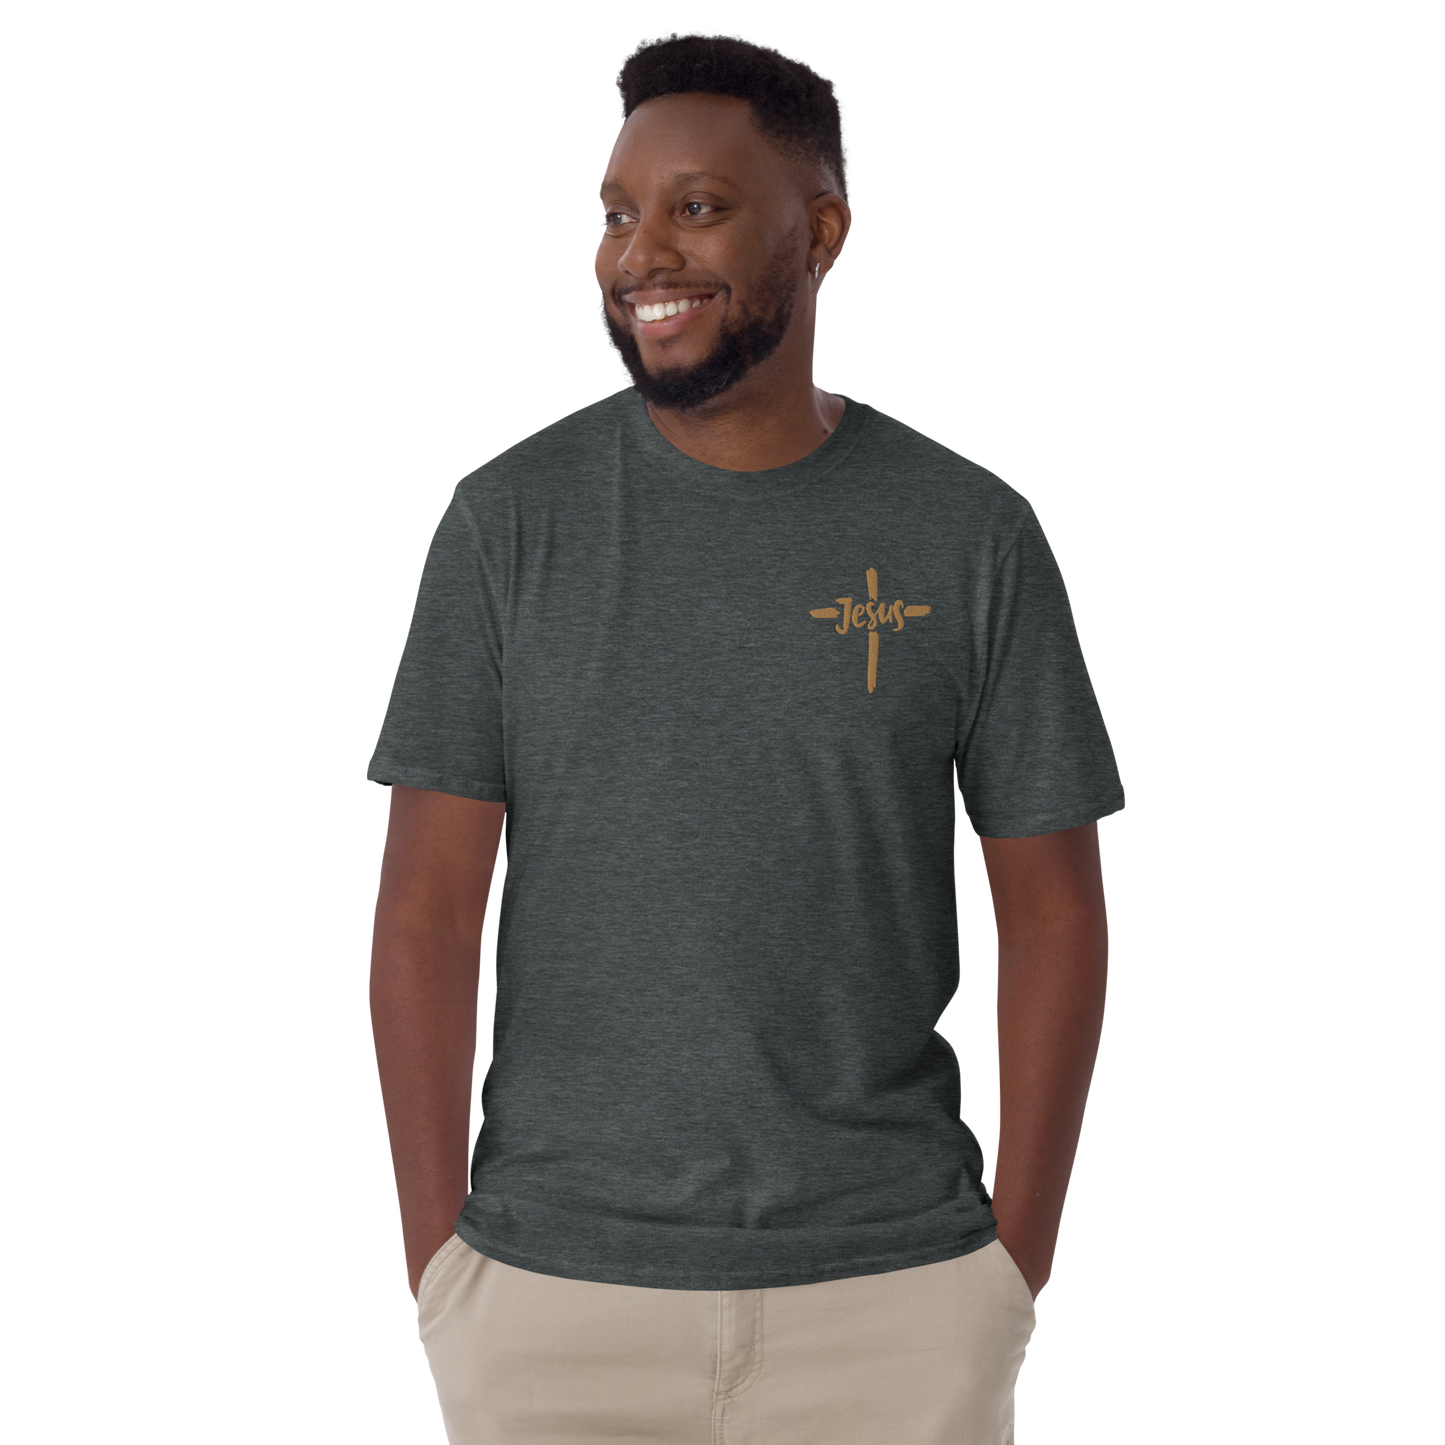 T-shirt chrétien brodé - JESUS